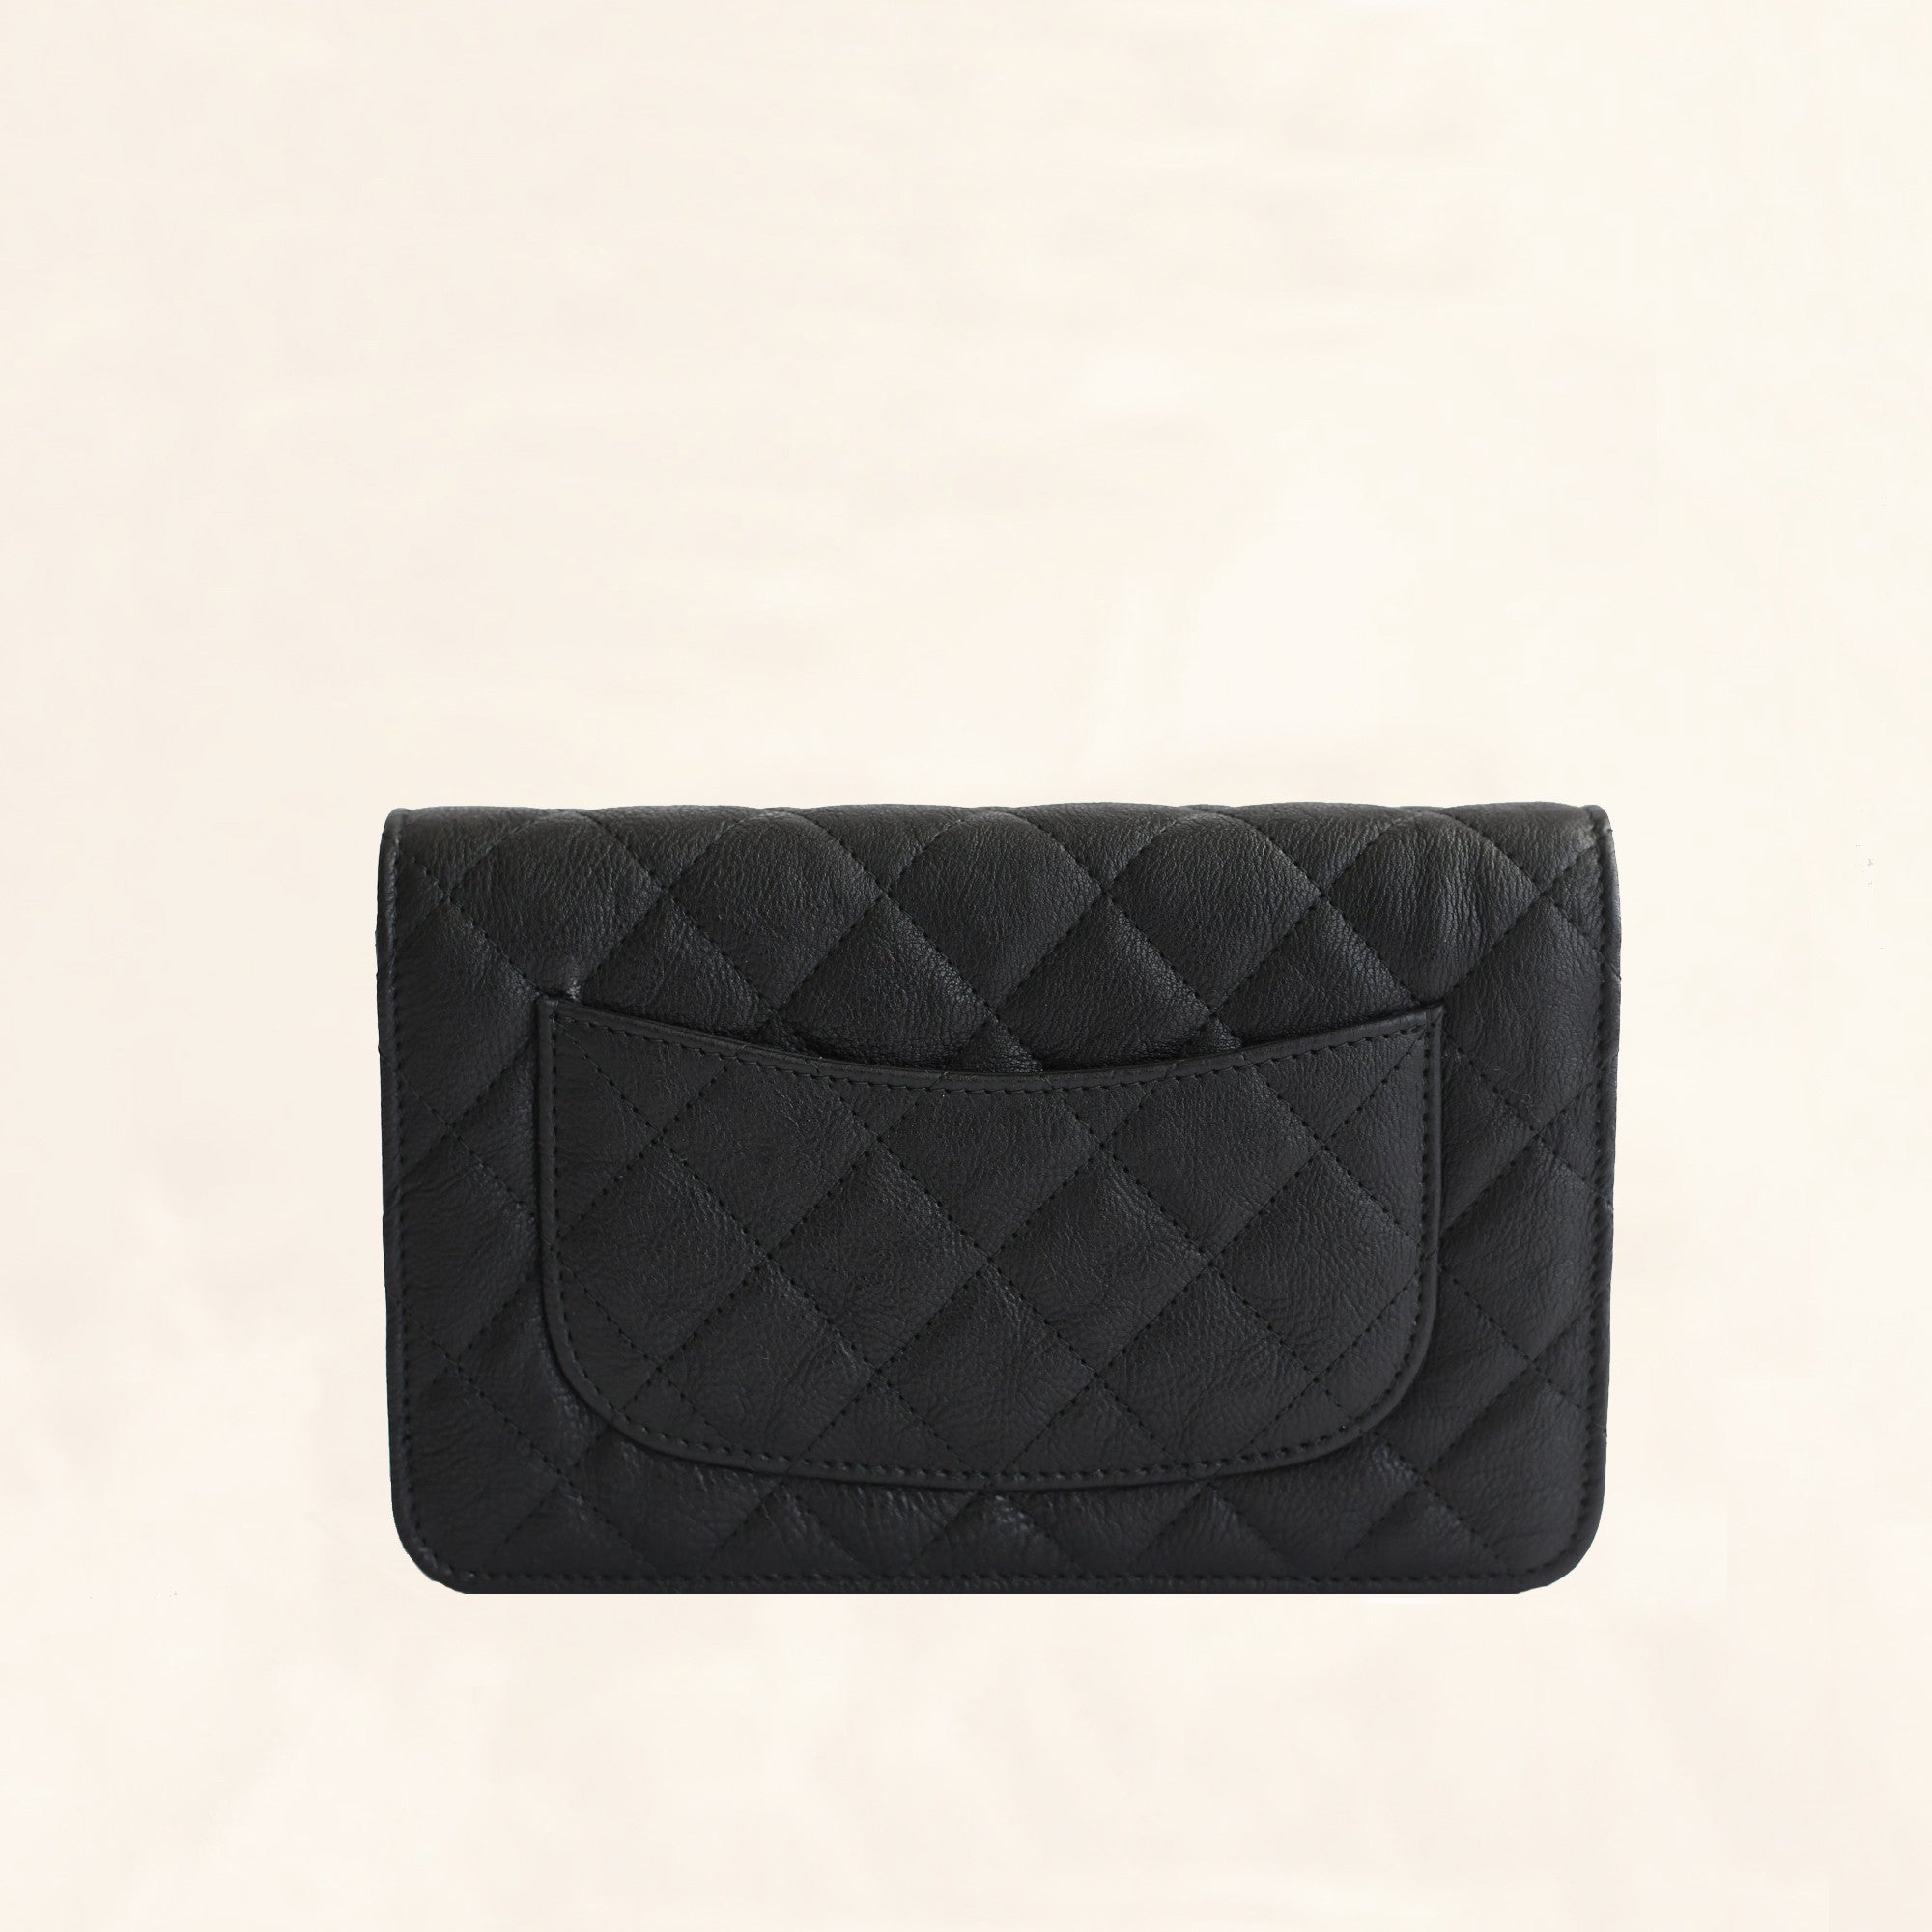 chanel black leather clutch wallet